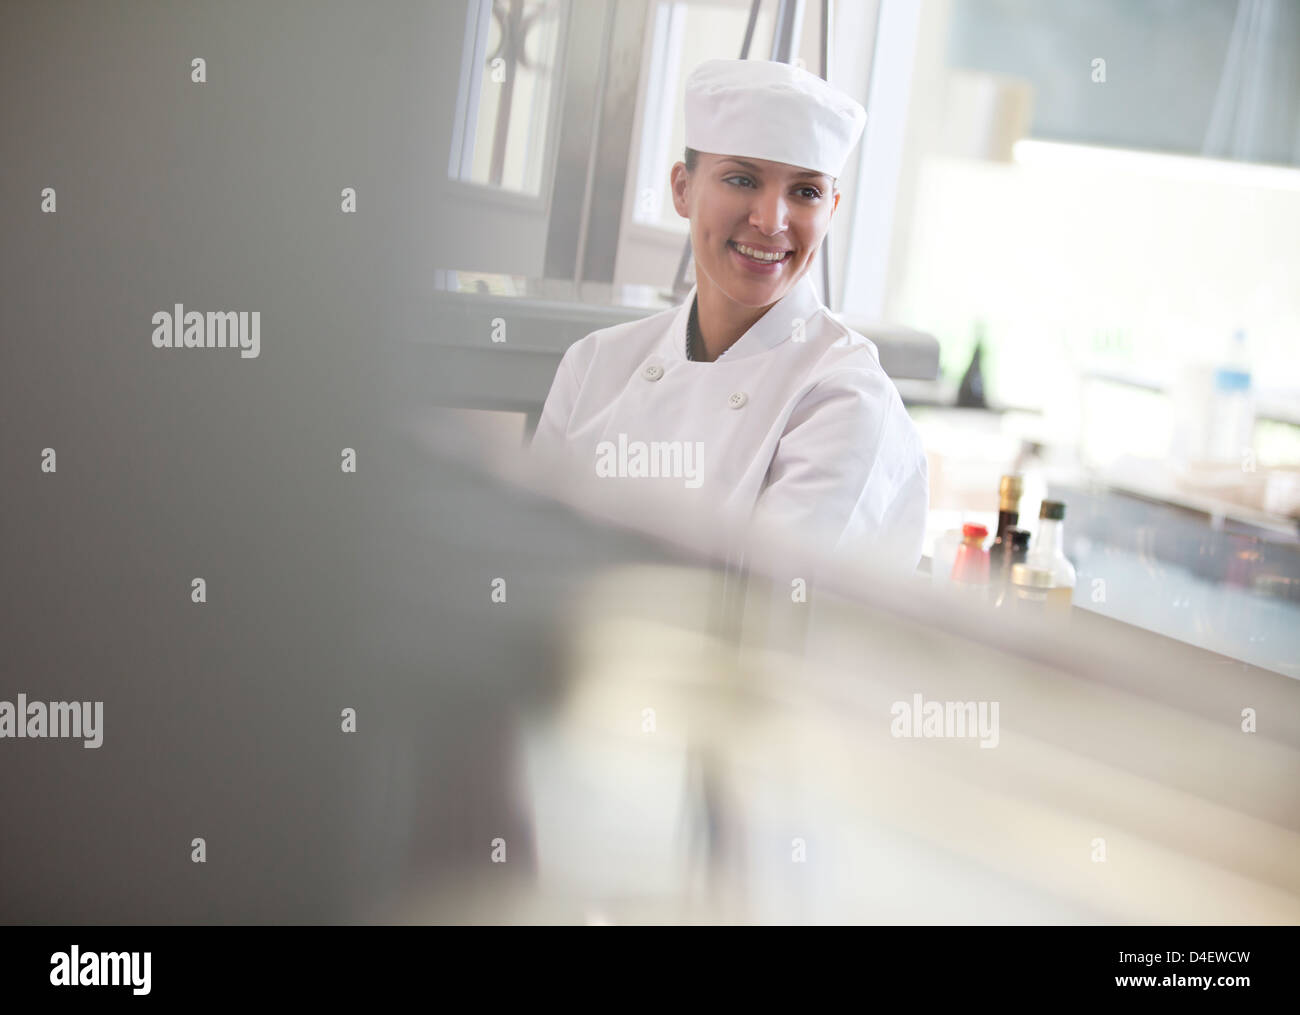 Chef smiling in restaurant kitchen Stock Photo